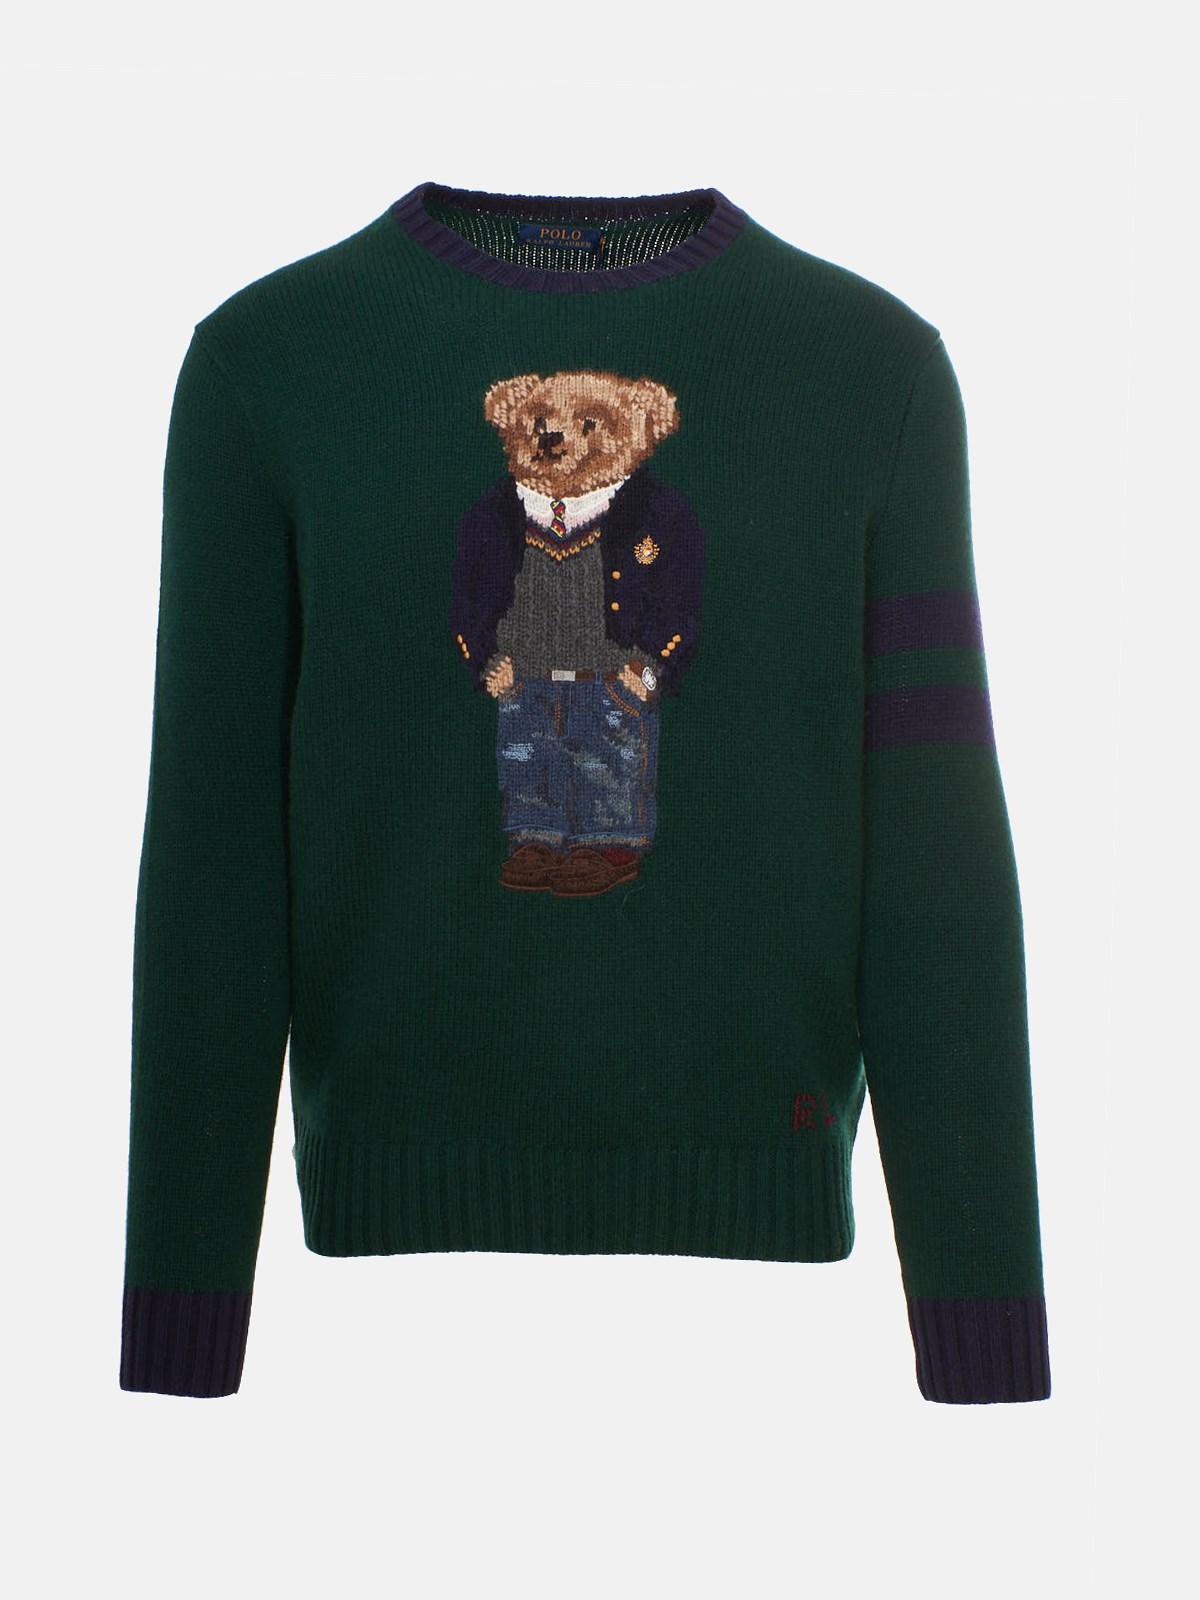 Polo Ralph Lauren Bear Sweater Online Offers, Save 53% | jlcatj.gob.mx